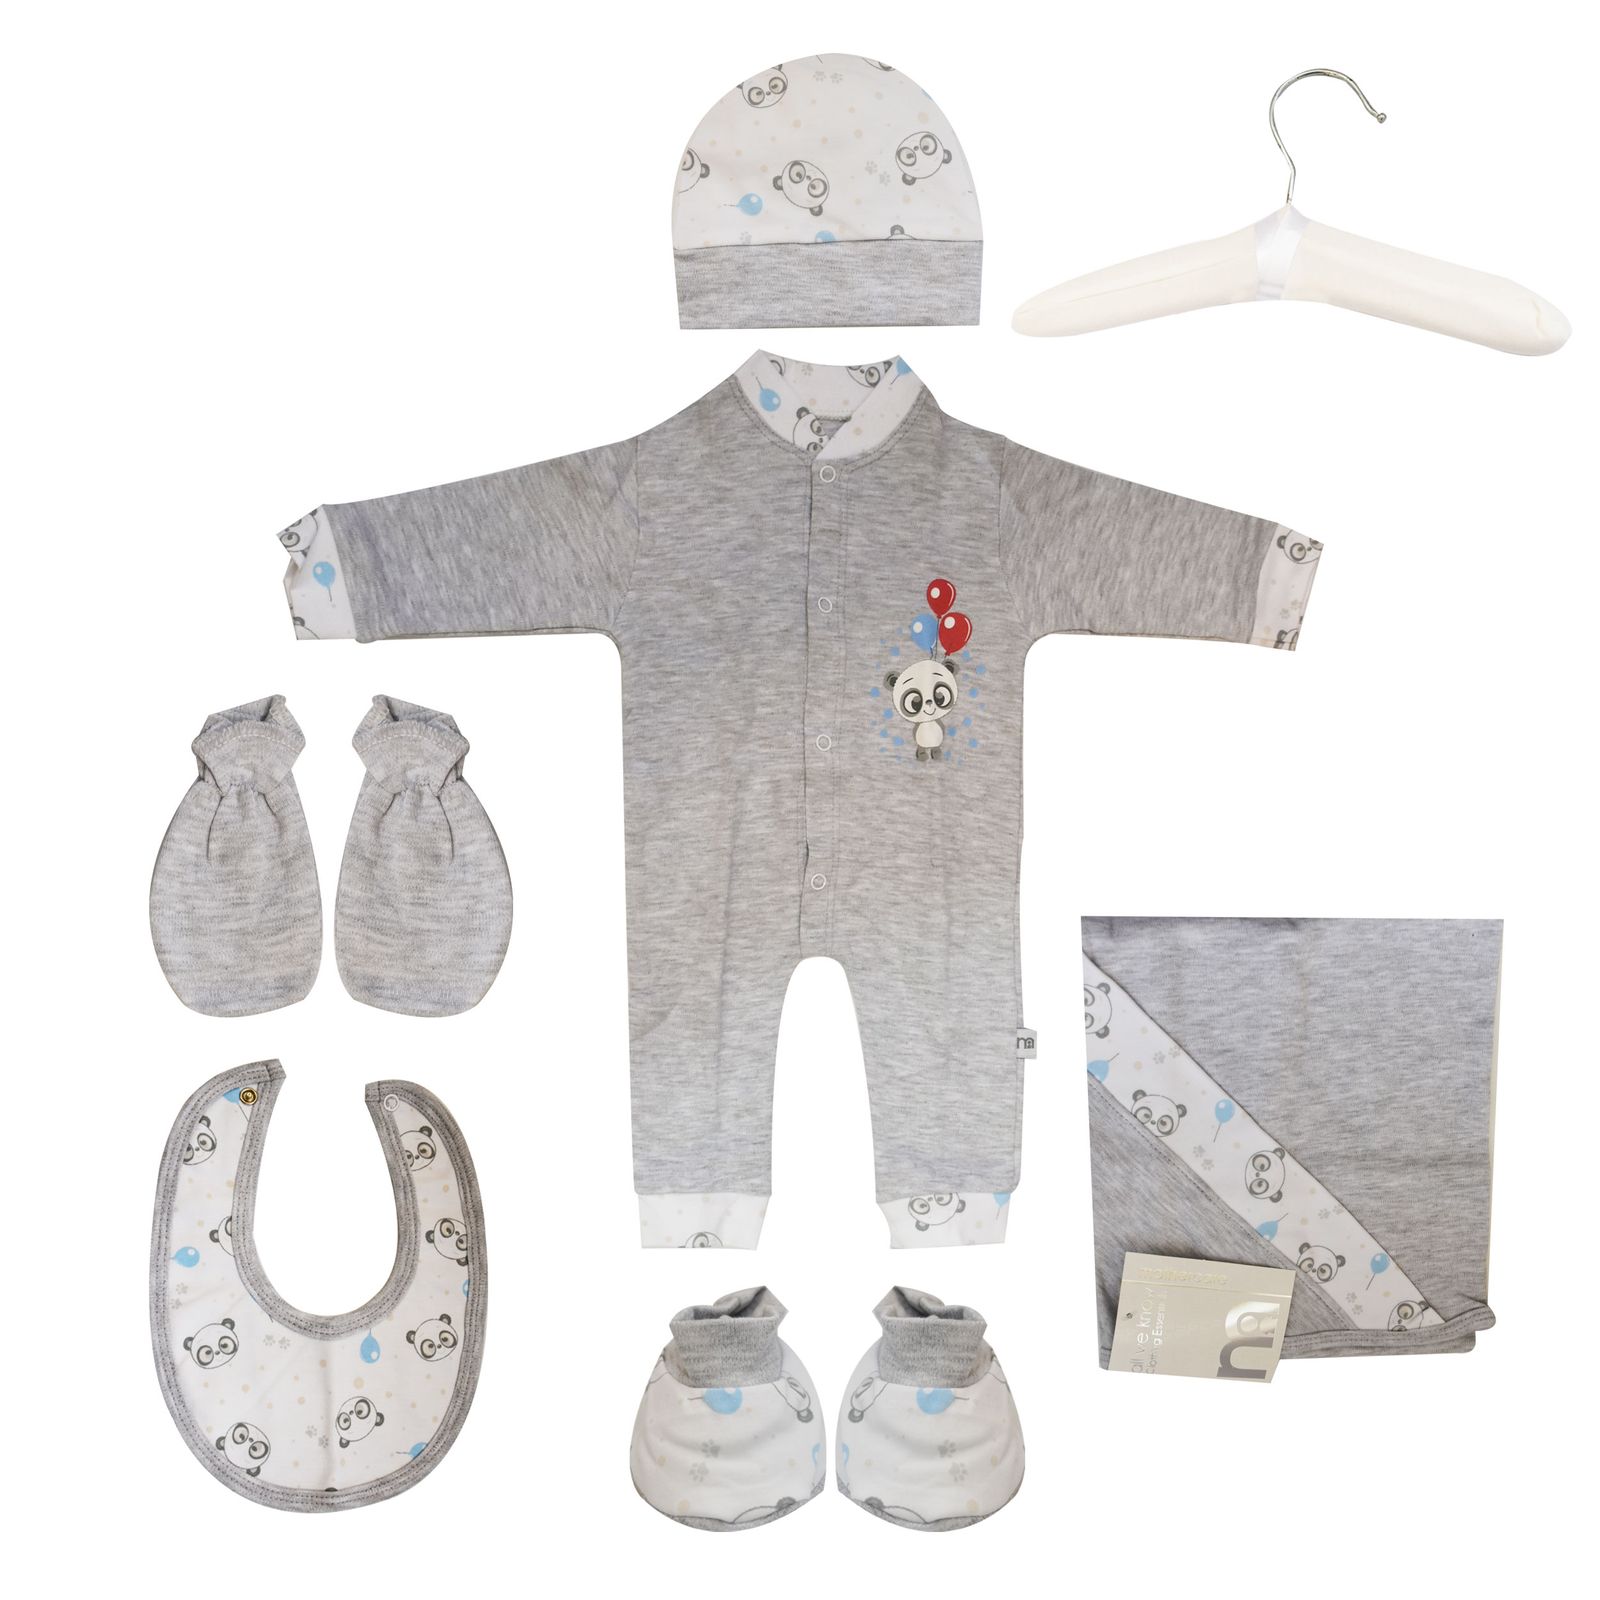  ست 7 تکه لباس نوزادی مادرکر طرح پاندا کد M454.13 -  - 1